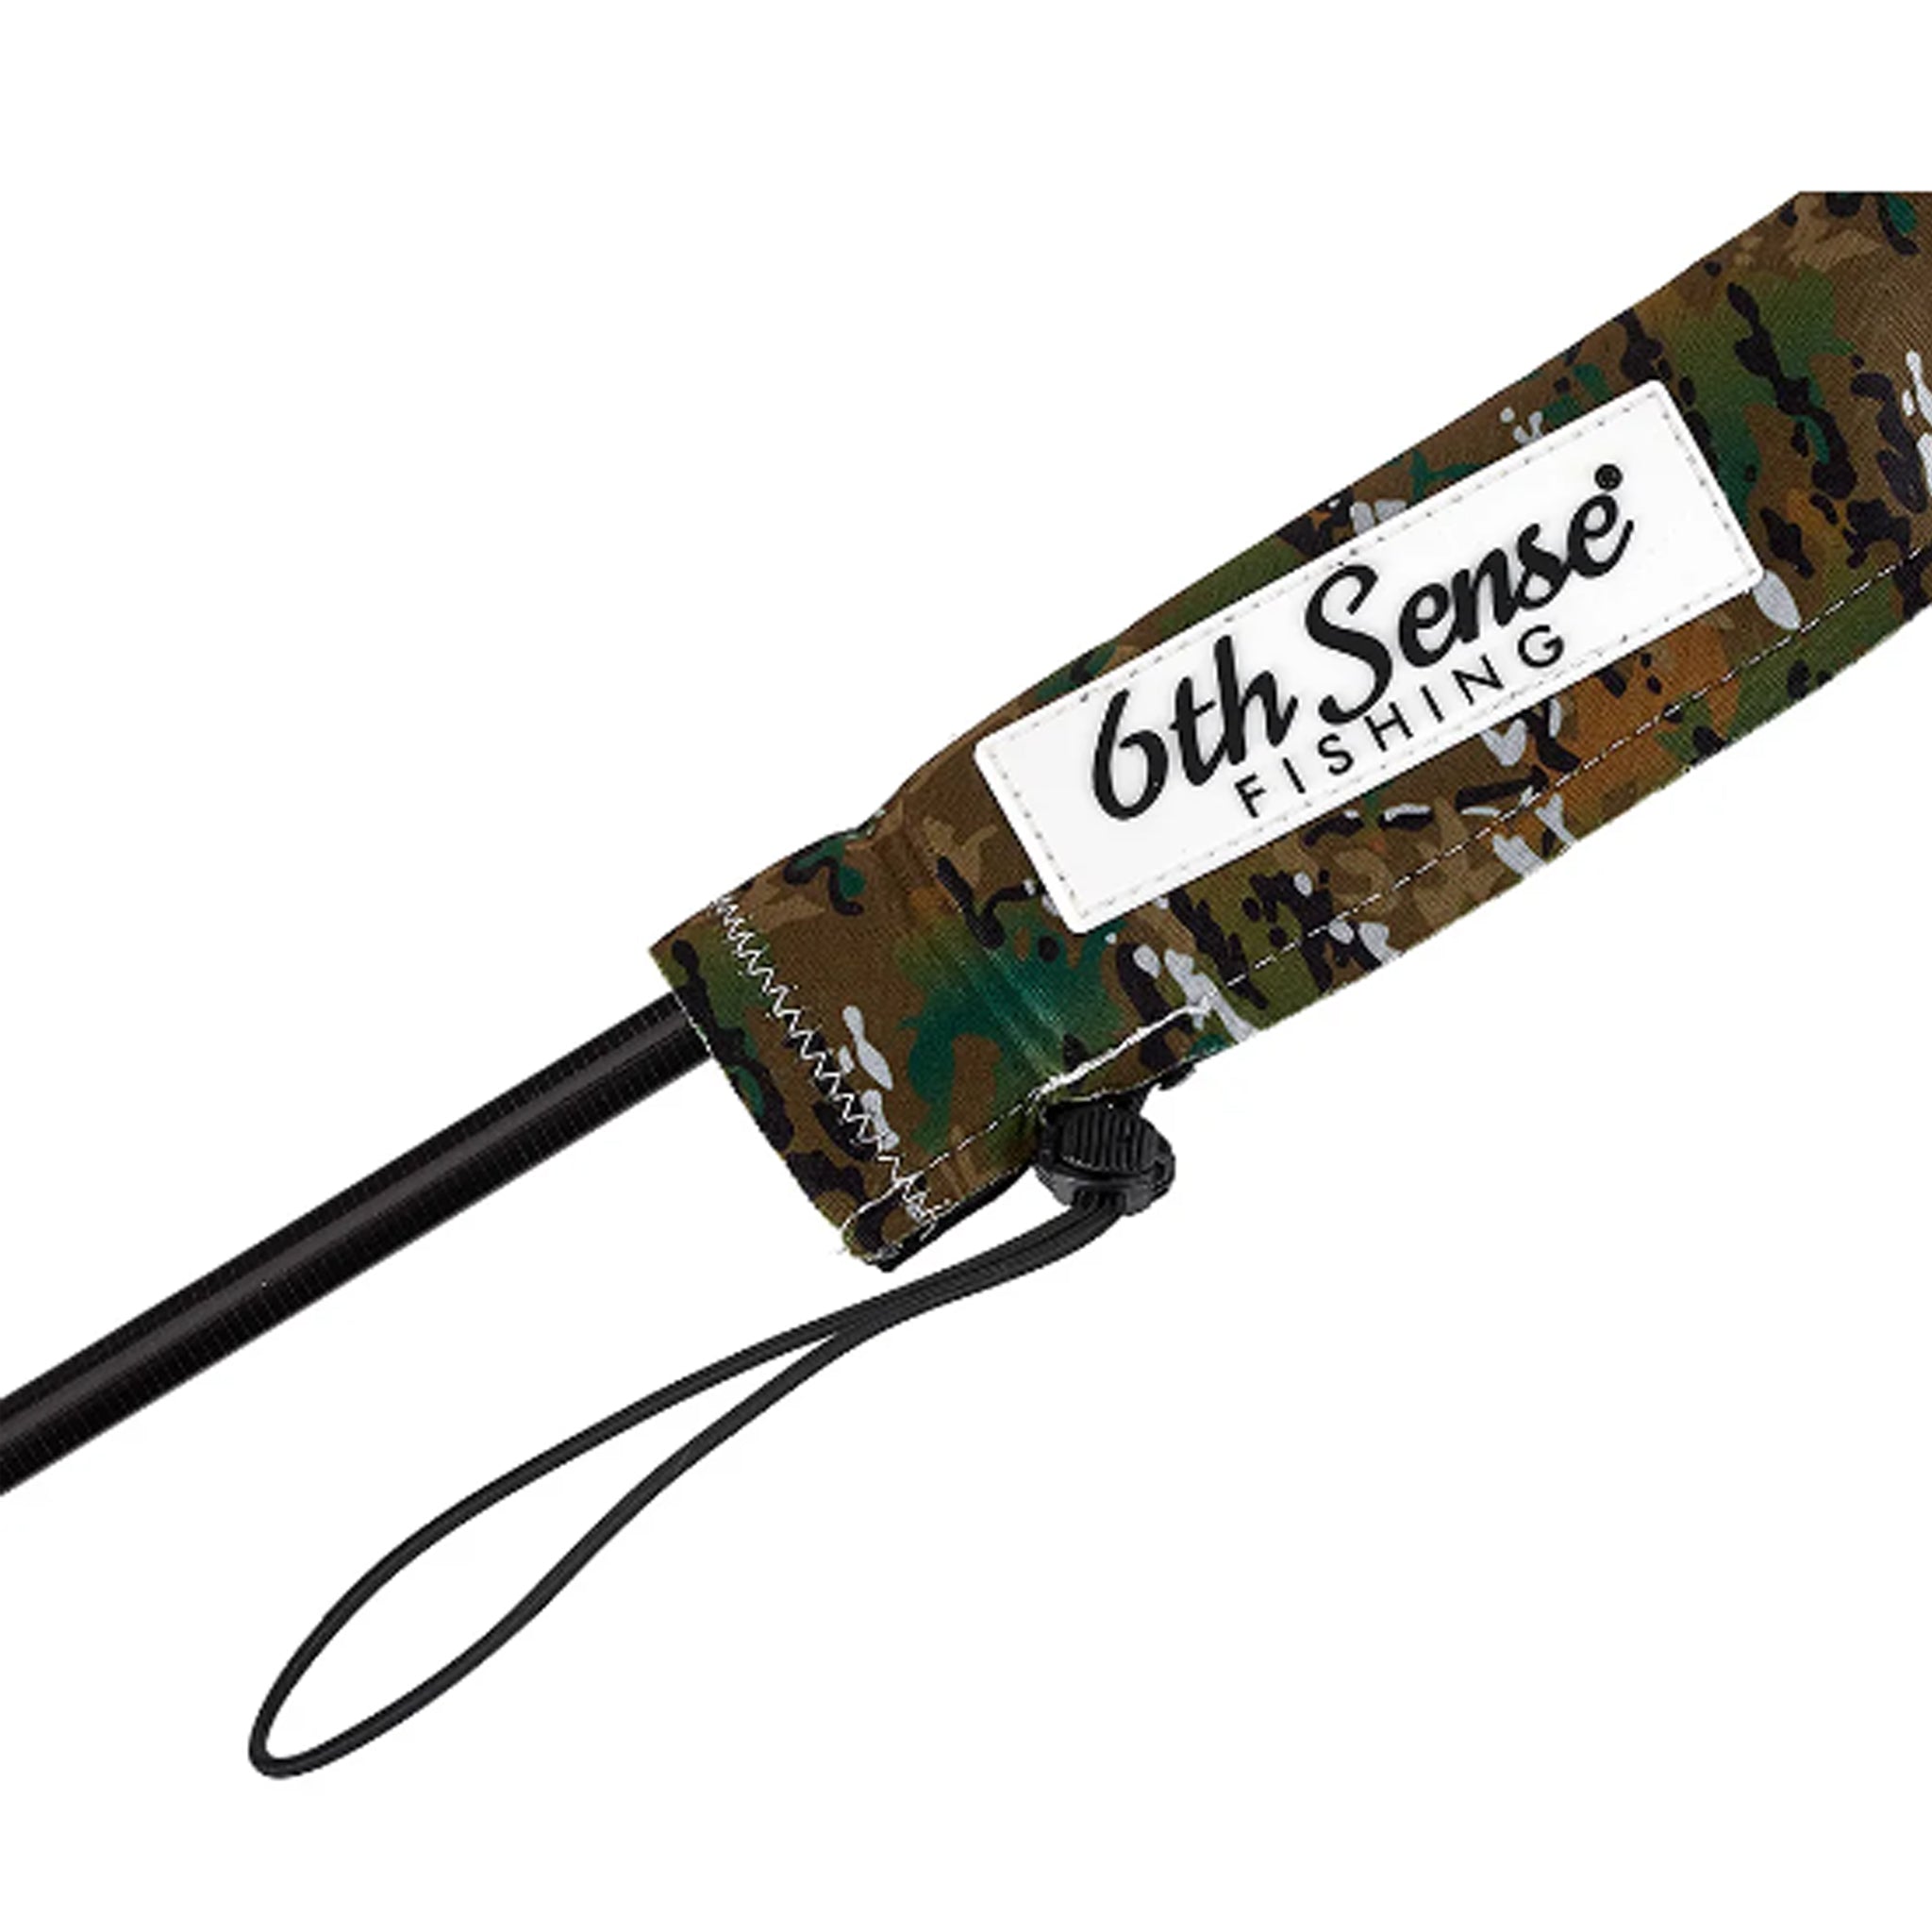 6th Sense Fishing - Neoprene Rod Sleeve - Baitcasting